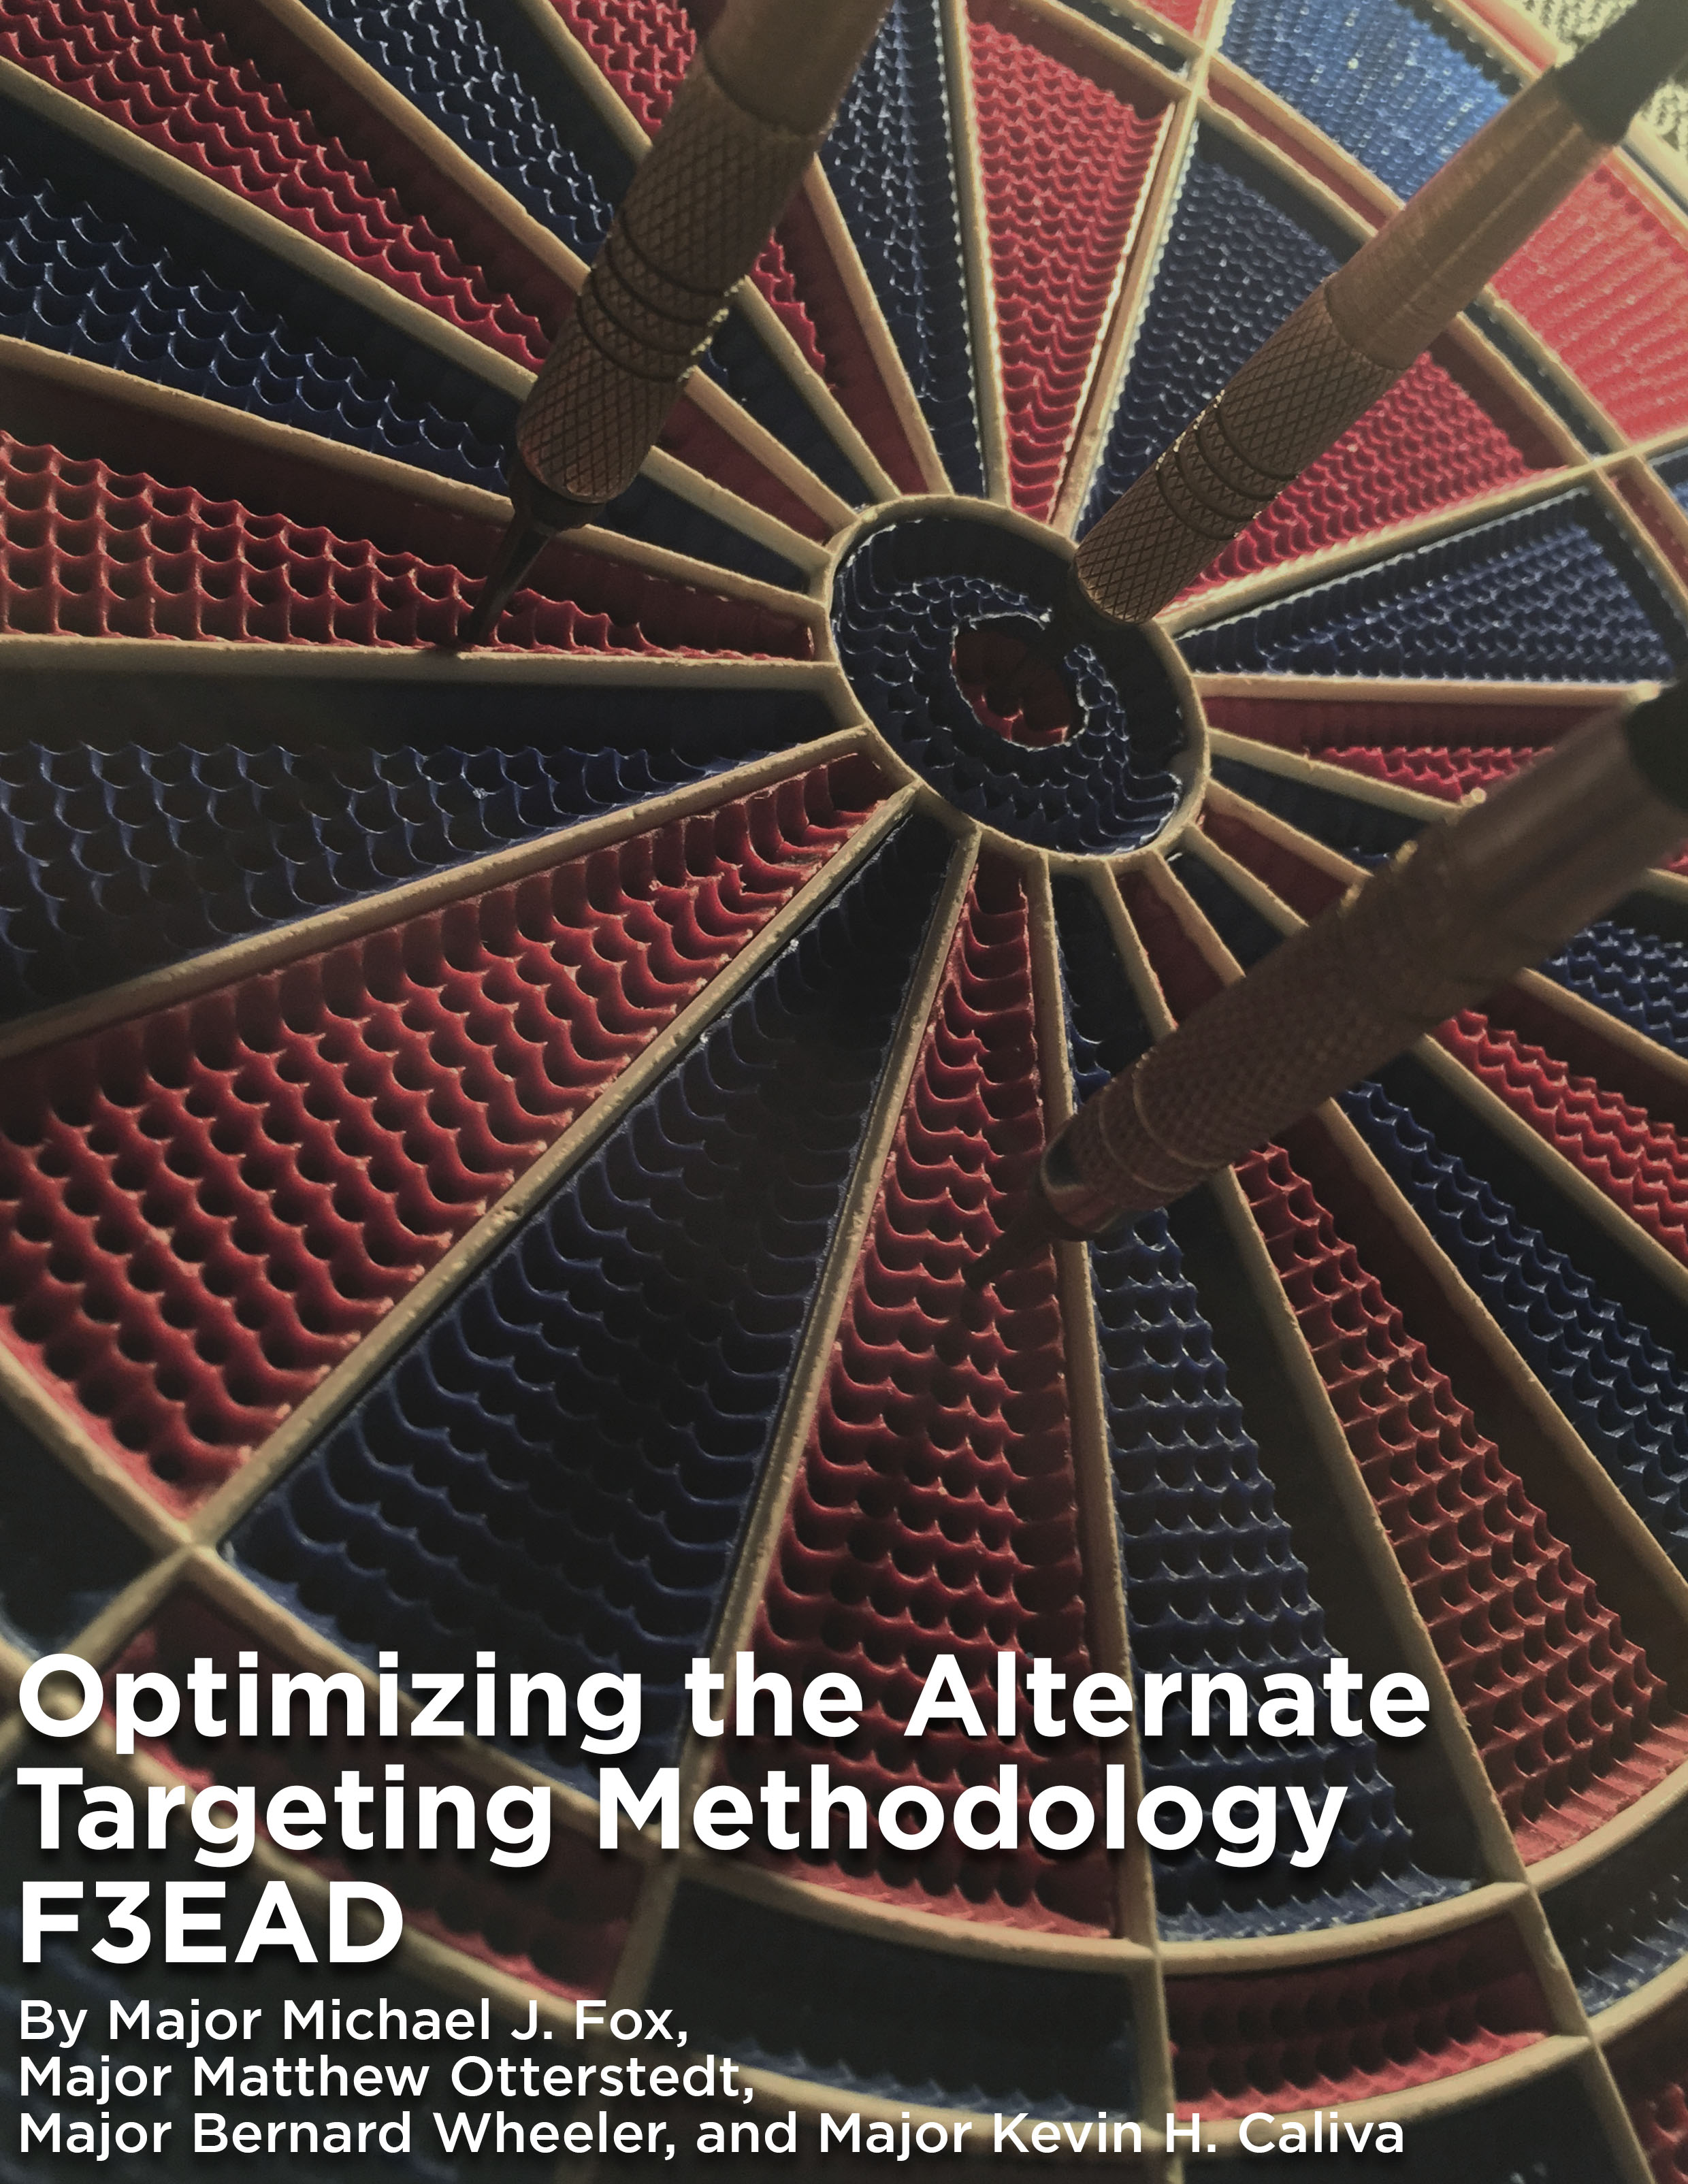 Optimizing the Alternate Targeting Methodology F3EAD